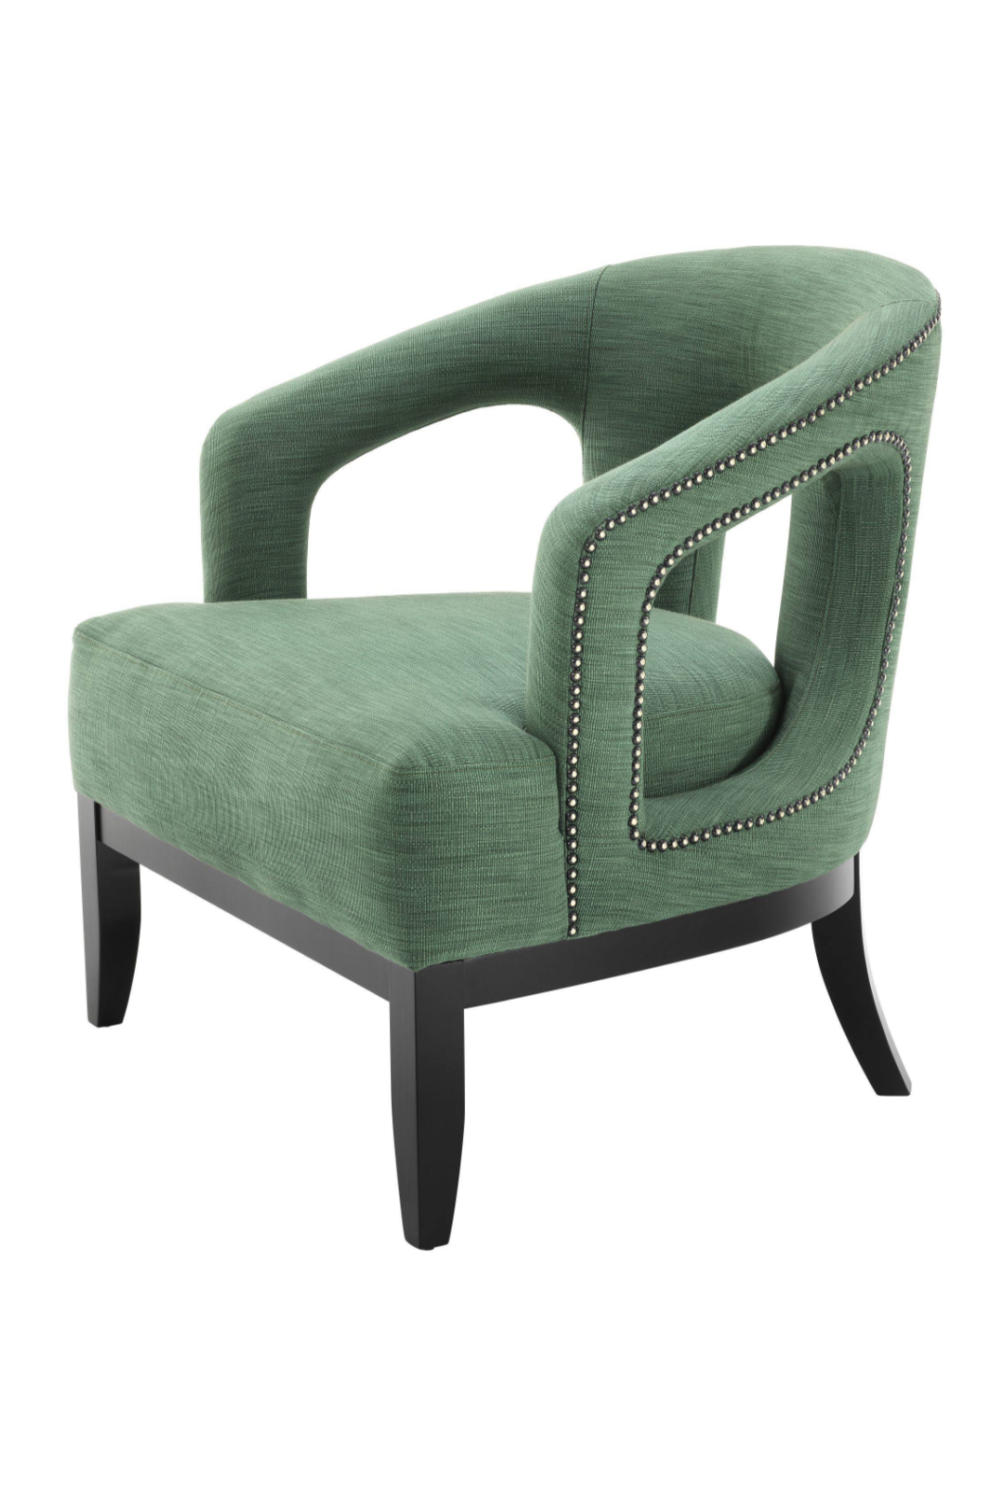 Studded Green Accent Chair | Eichholtz Adam| Oroa.com